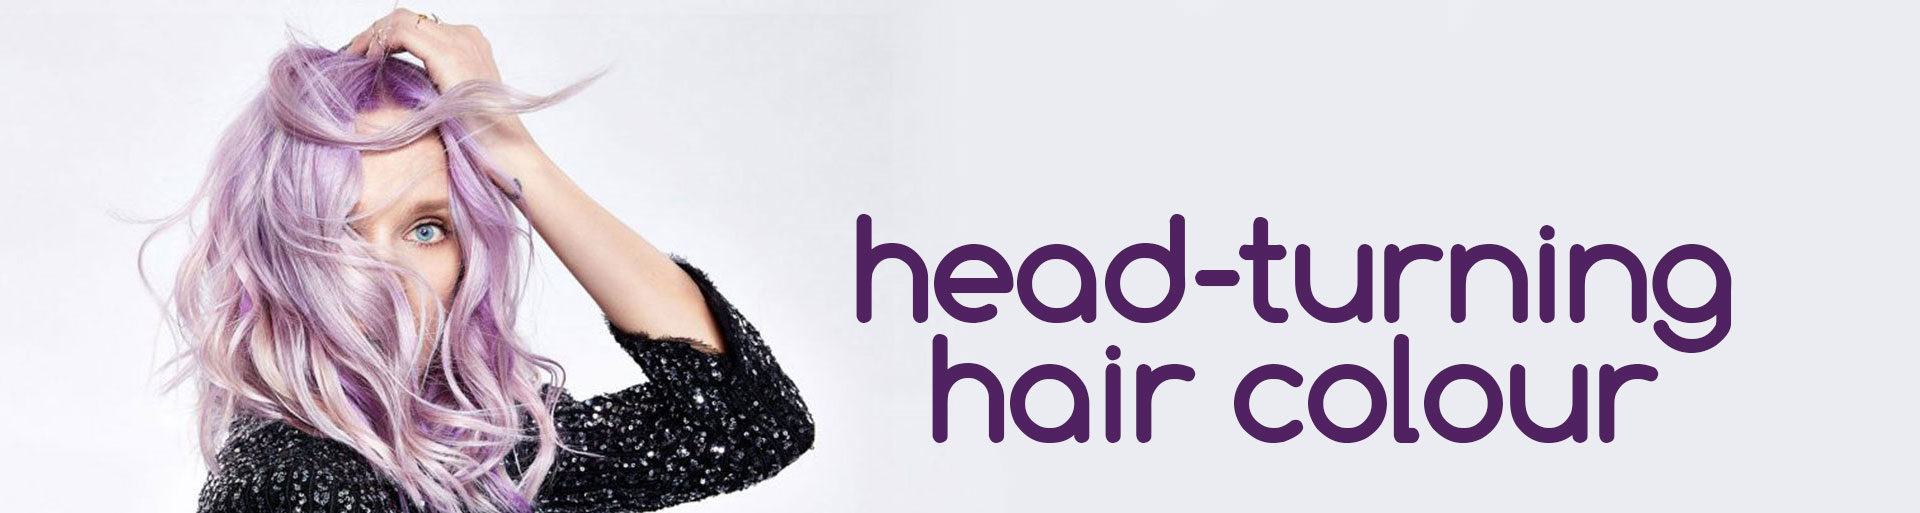 head-turning-hair-colour-banner